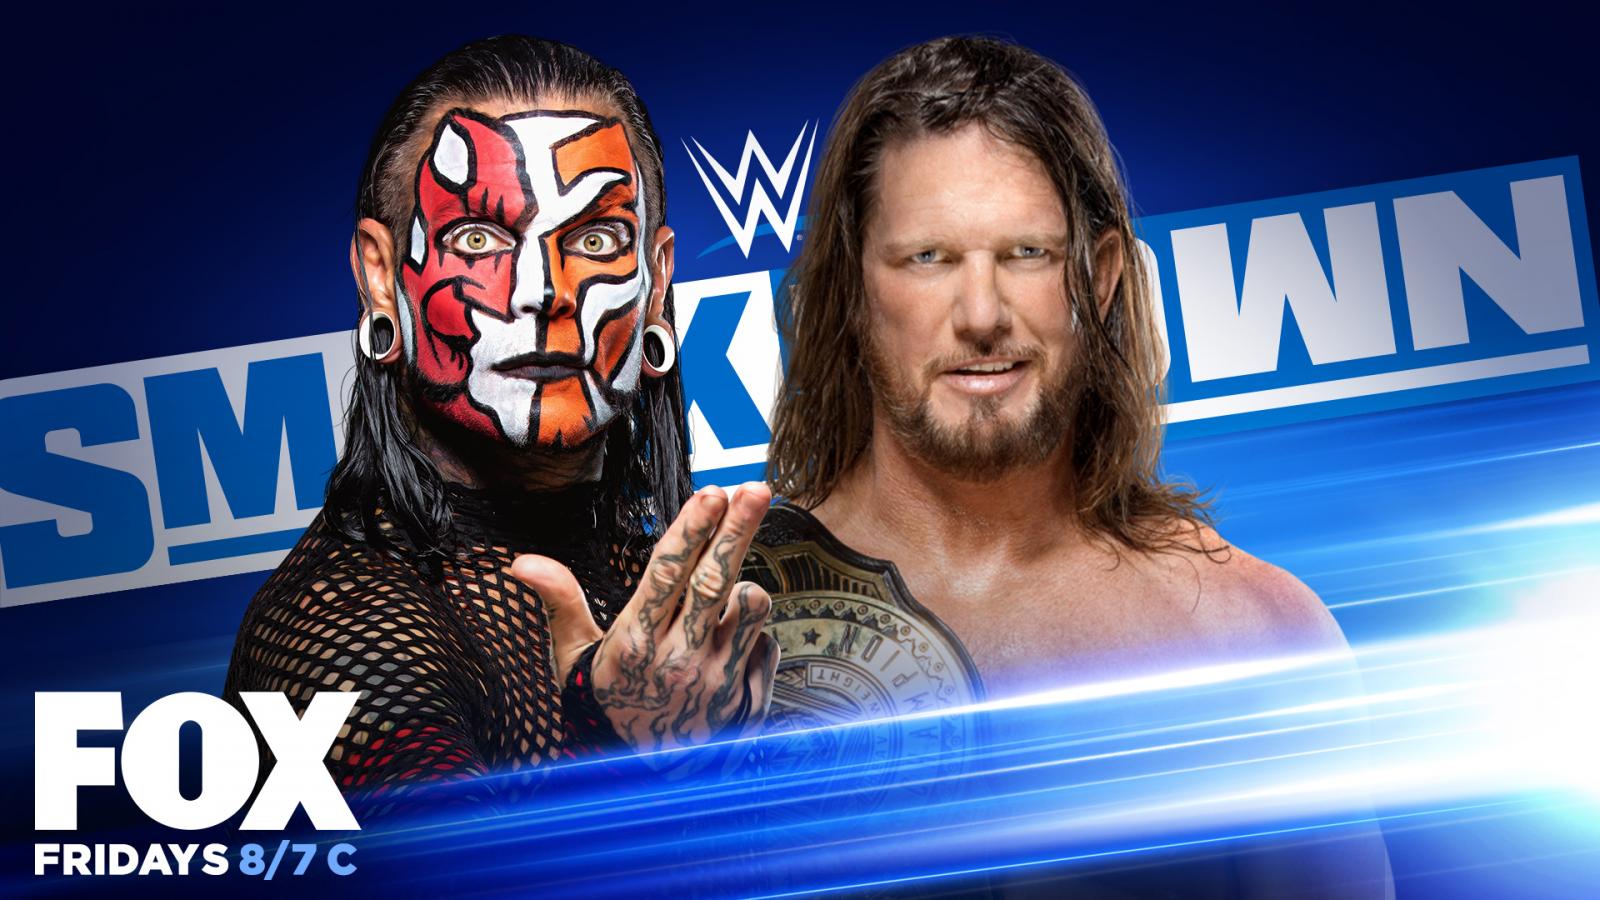 Jeff Hardy vs AJ Styles - Intercontinental Championship Match On SmackDown Before SummerSlam 2020